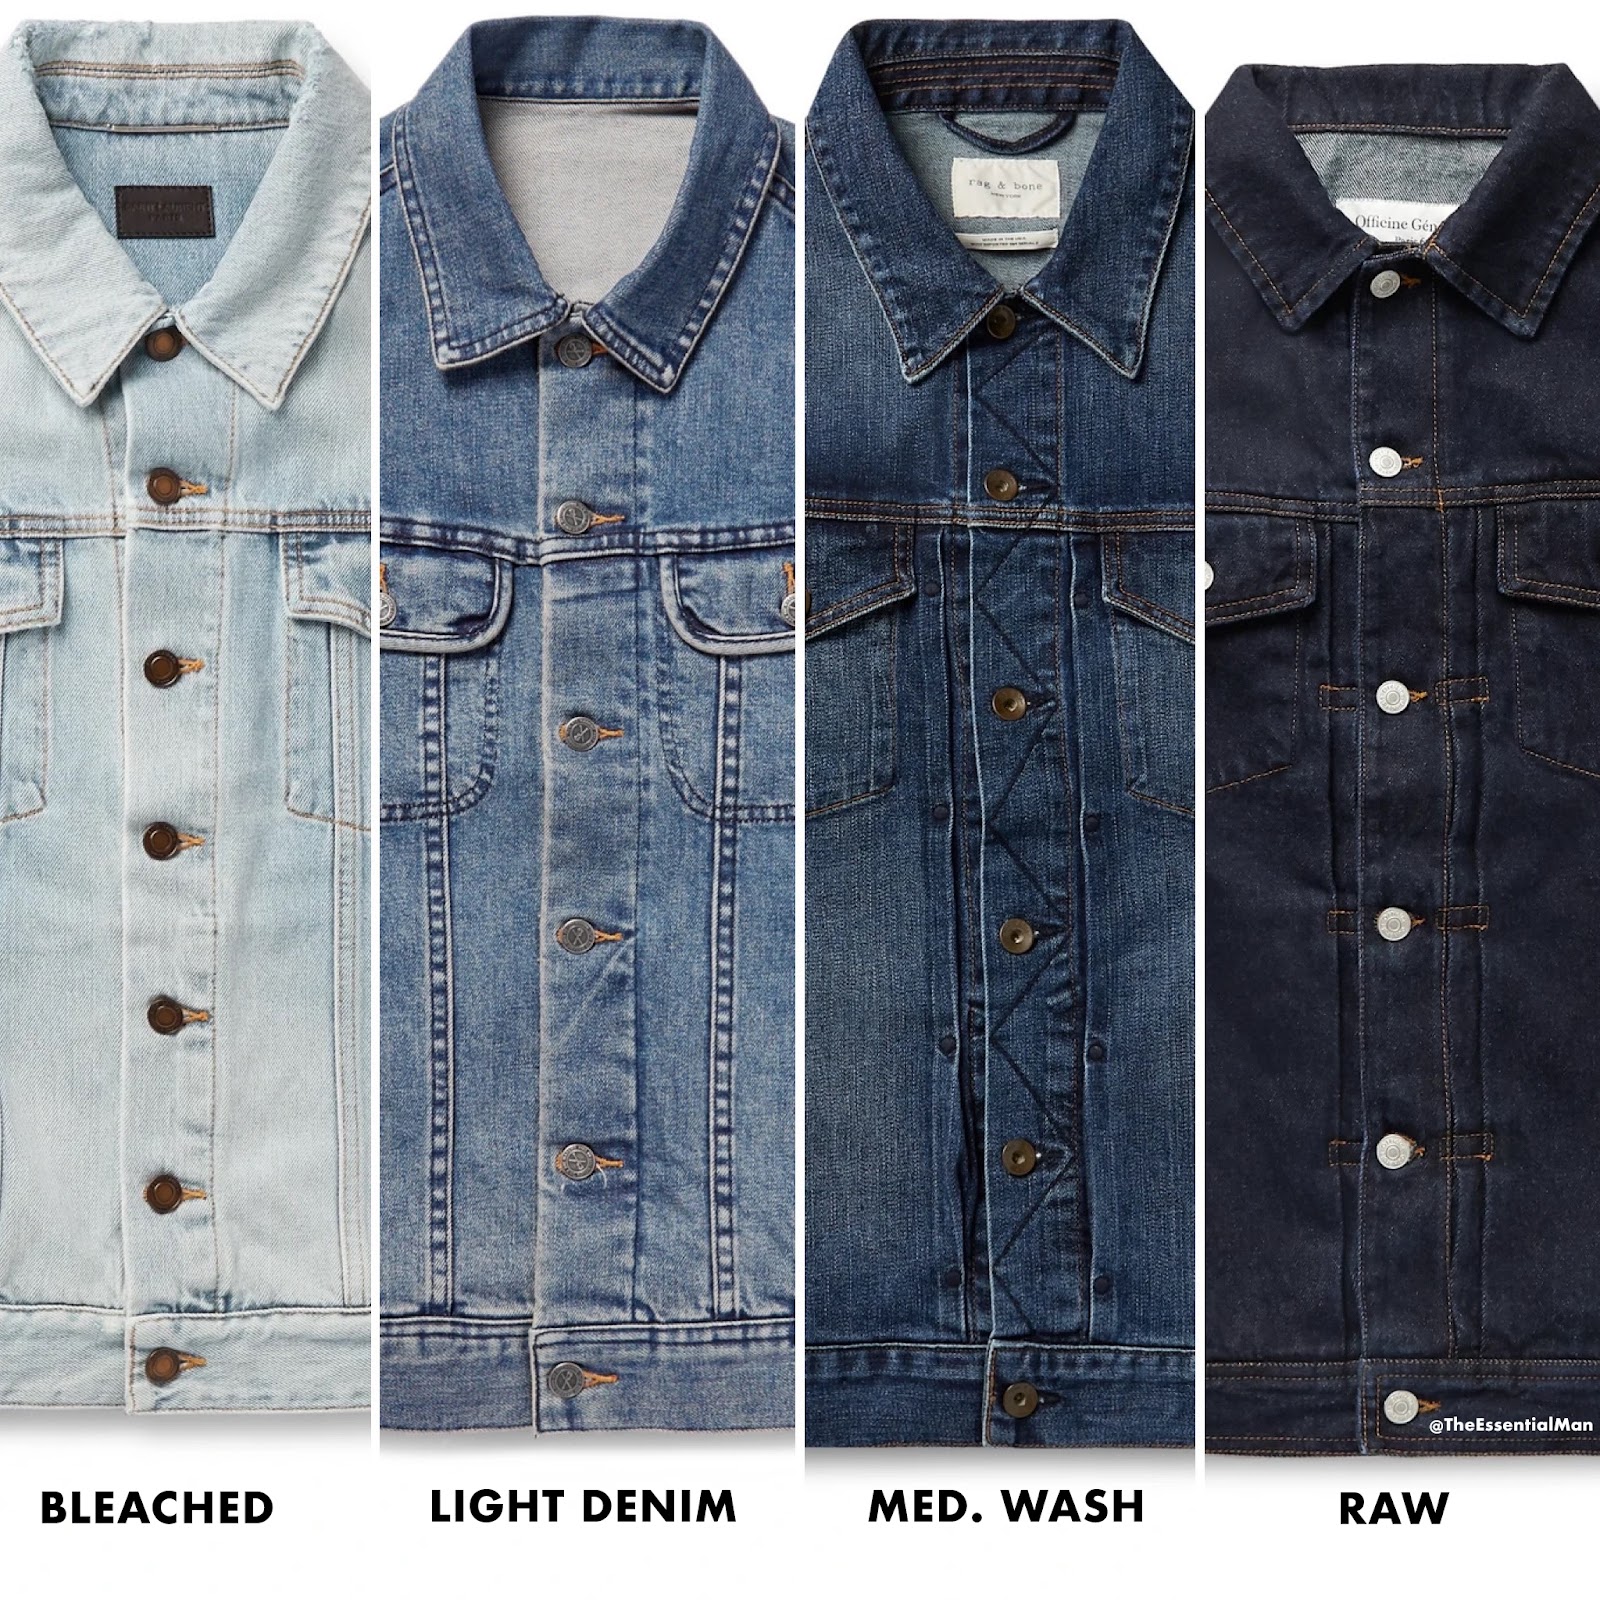 Jean Jacket For Men - How To Buy Denim Jackets Men's Guide